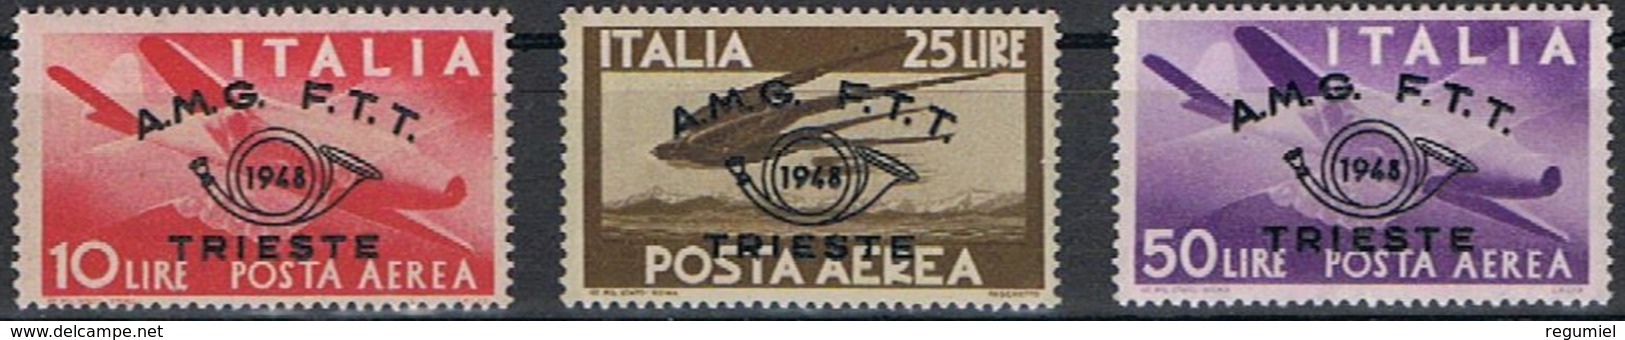 Trieste AMG-FTT  Aereo 12a/12c ** MNH. 1948 - Mint/hinged